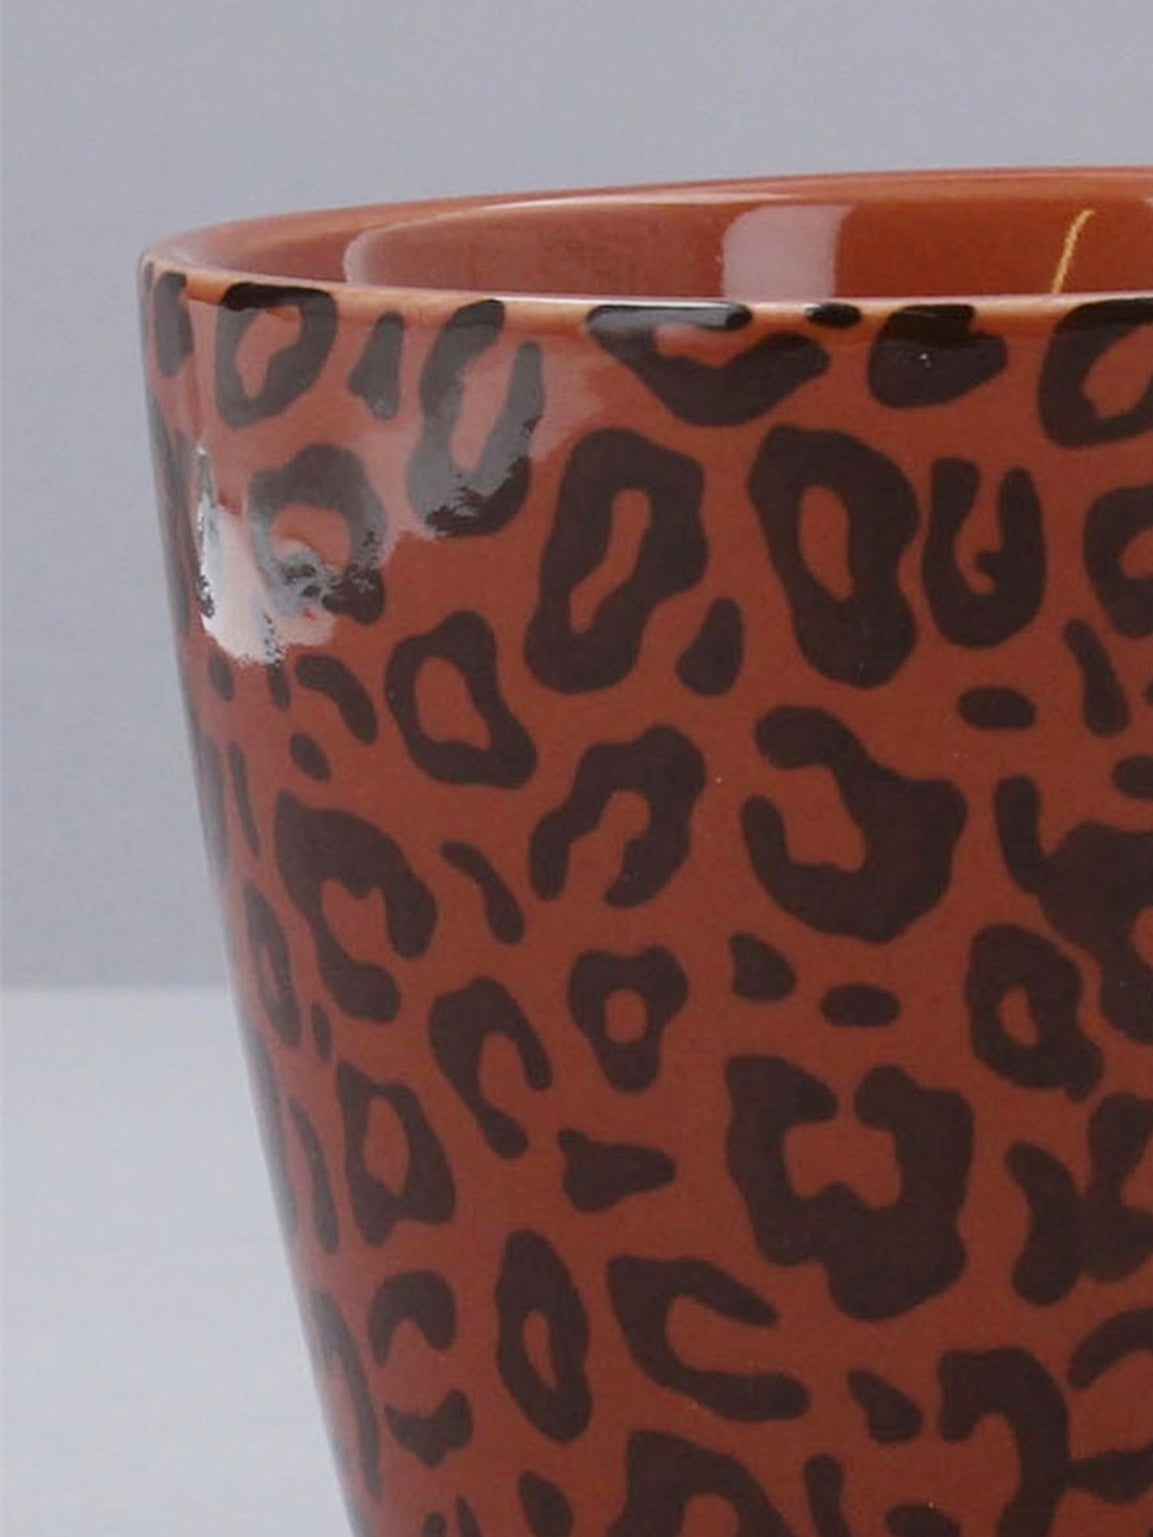 Brown Animal Print Ceramic Mug